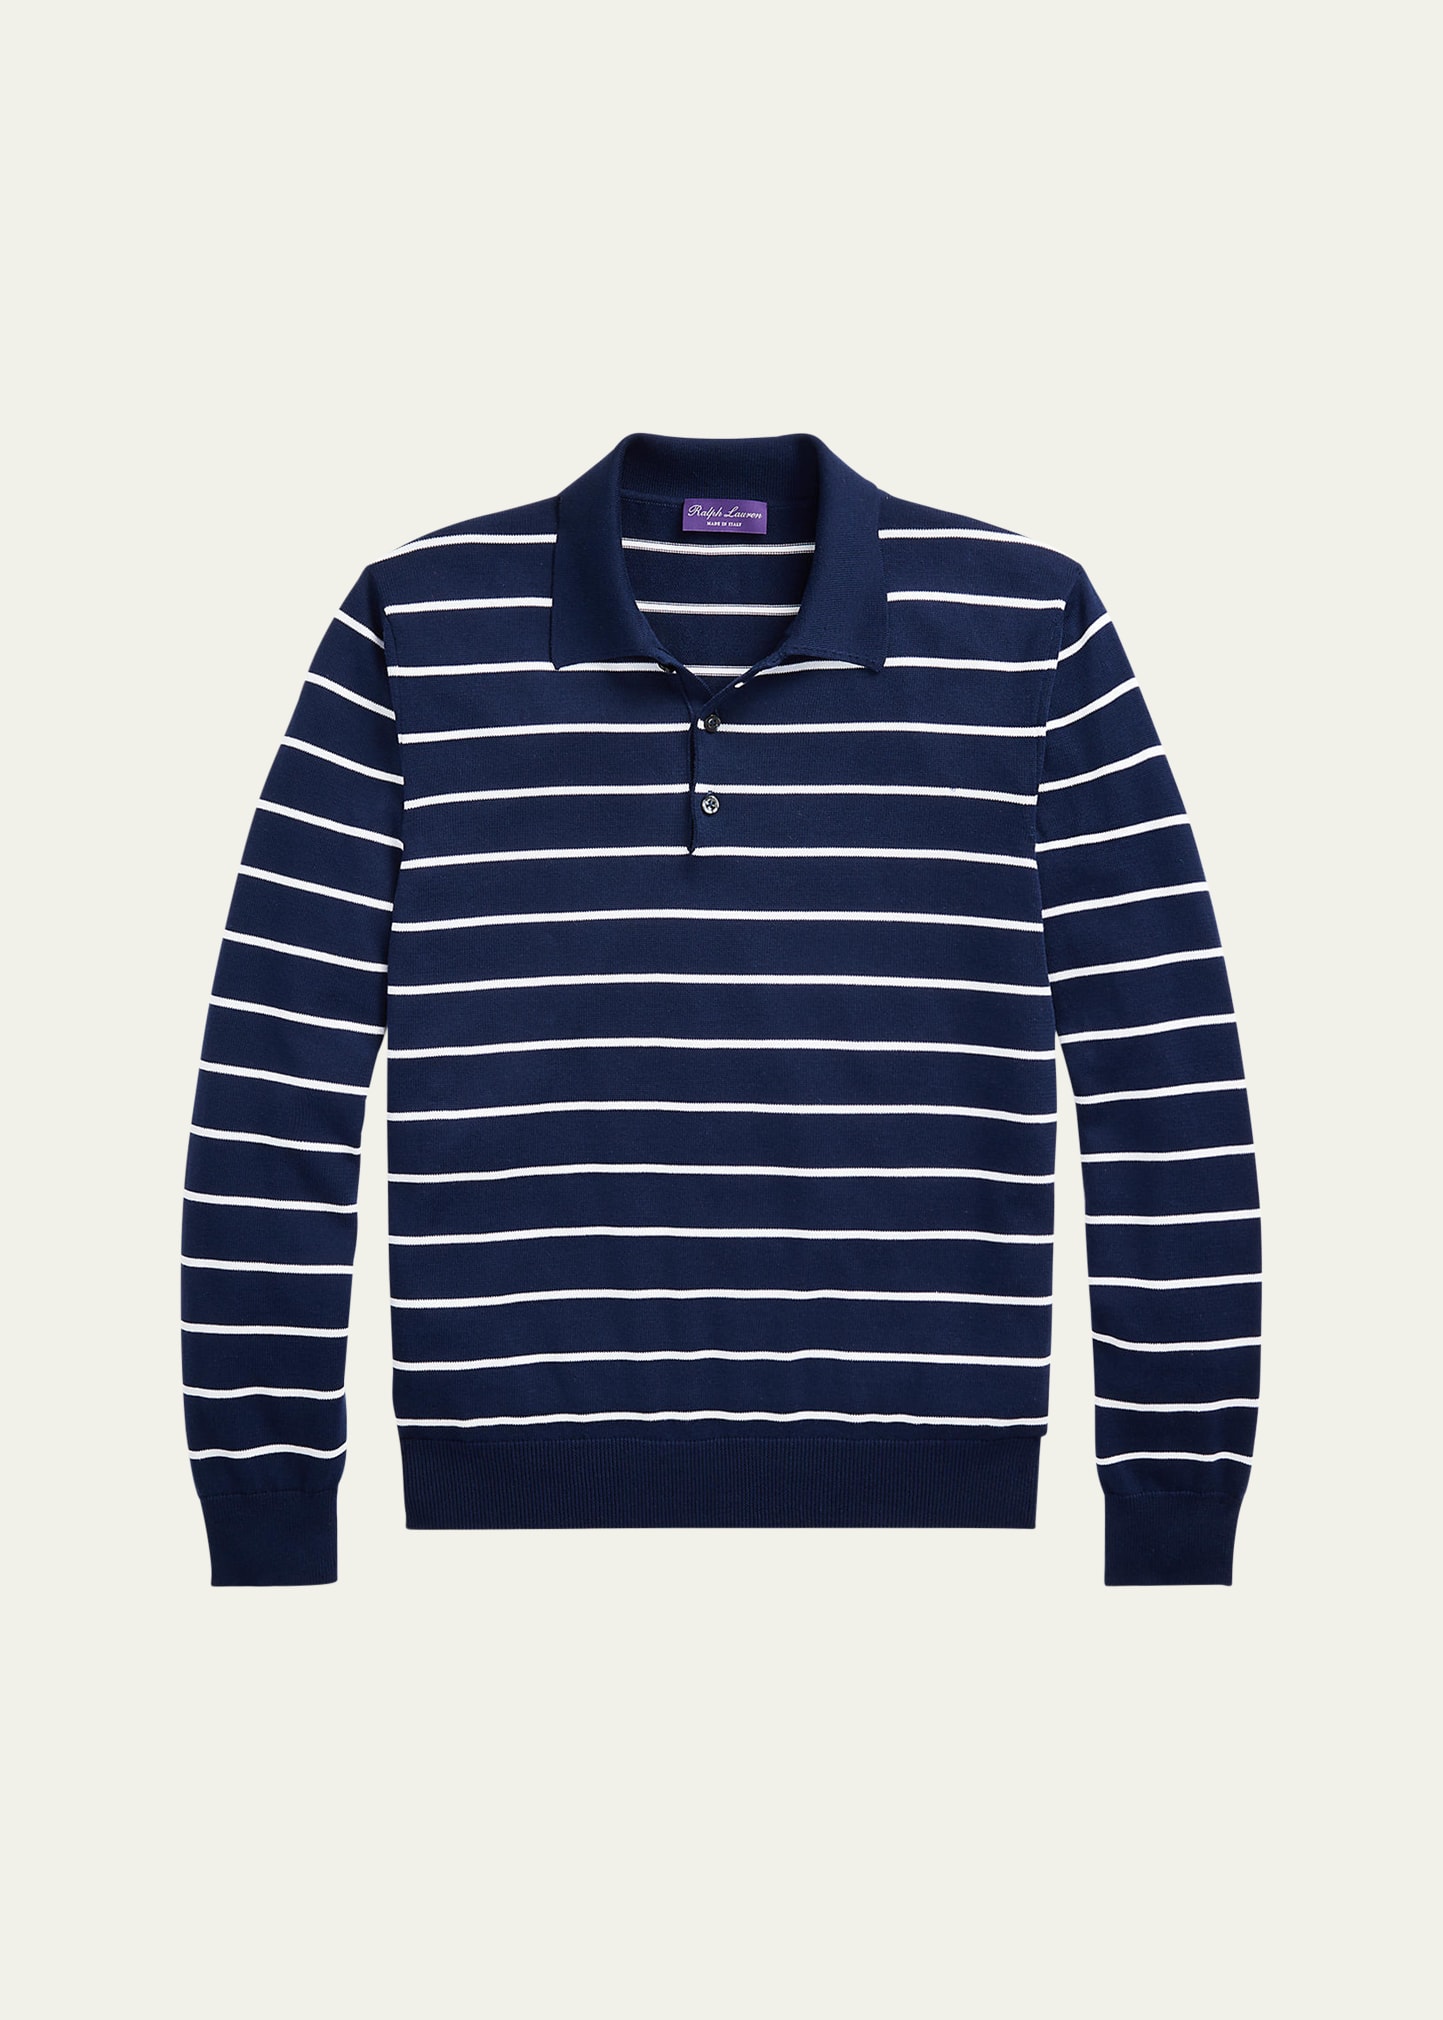 Men's Luxe Striped Jersey Polo Shirt